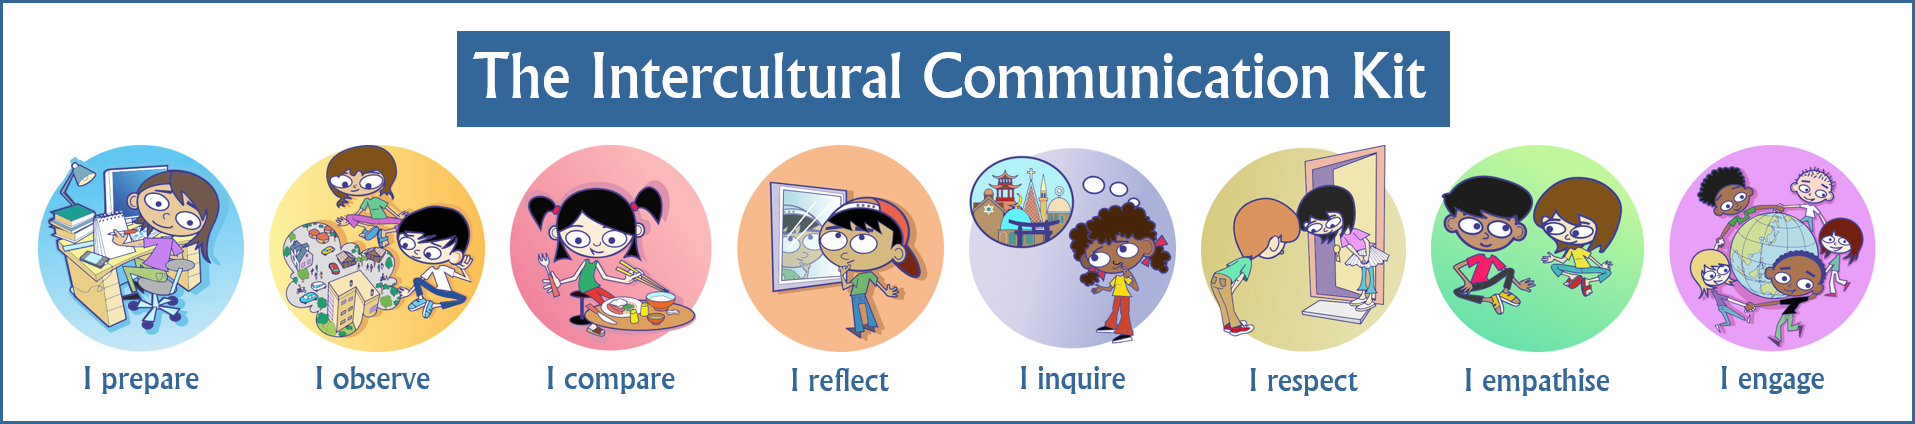 culture clipart intercultural communication